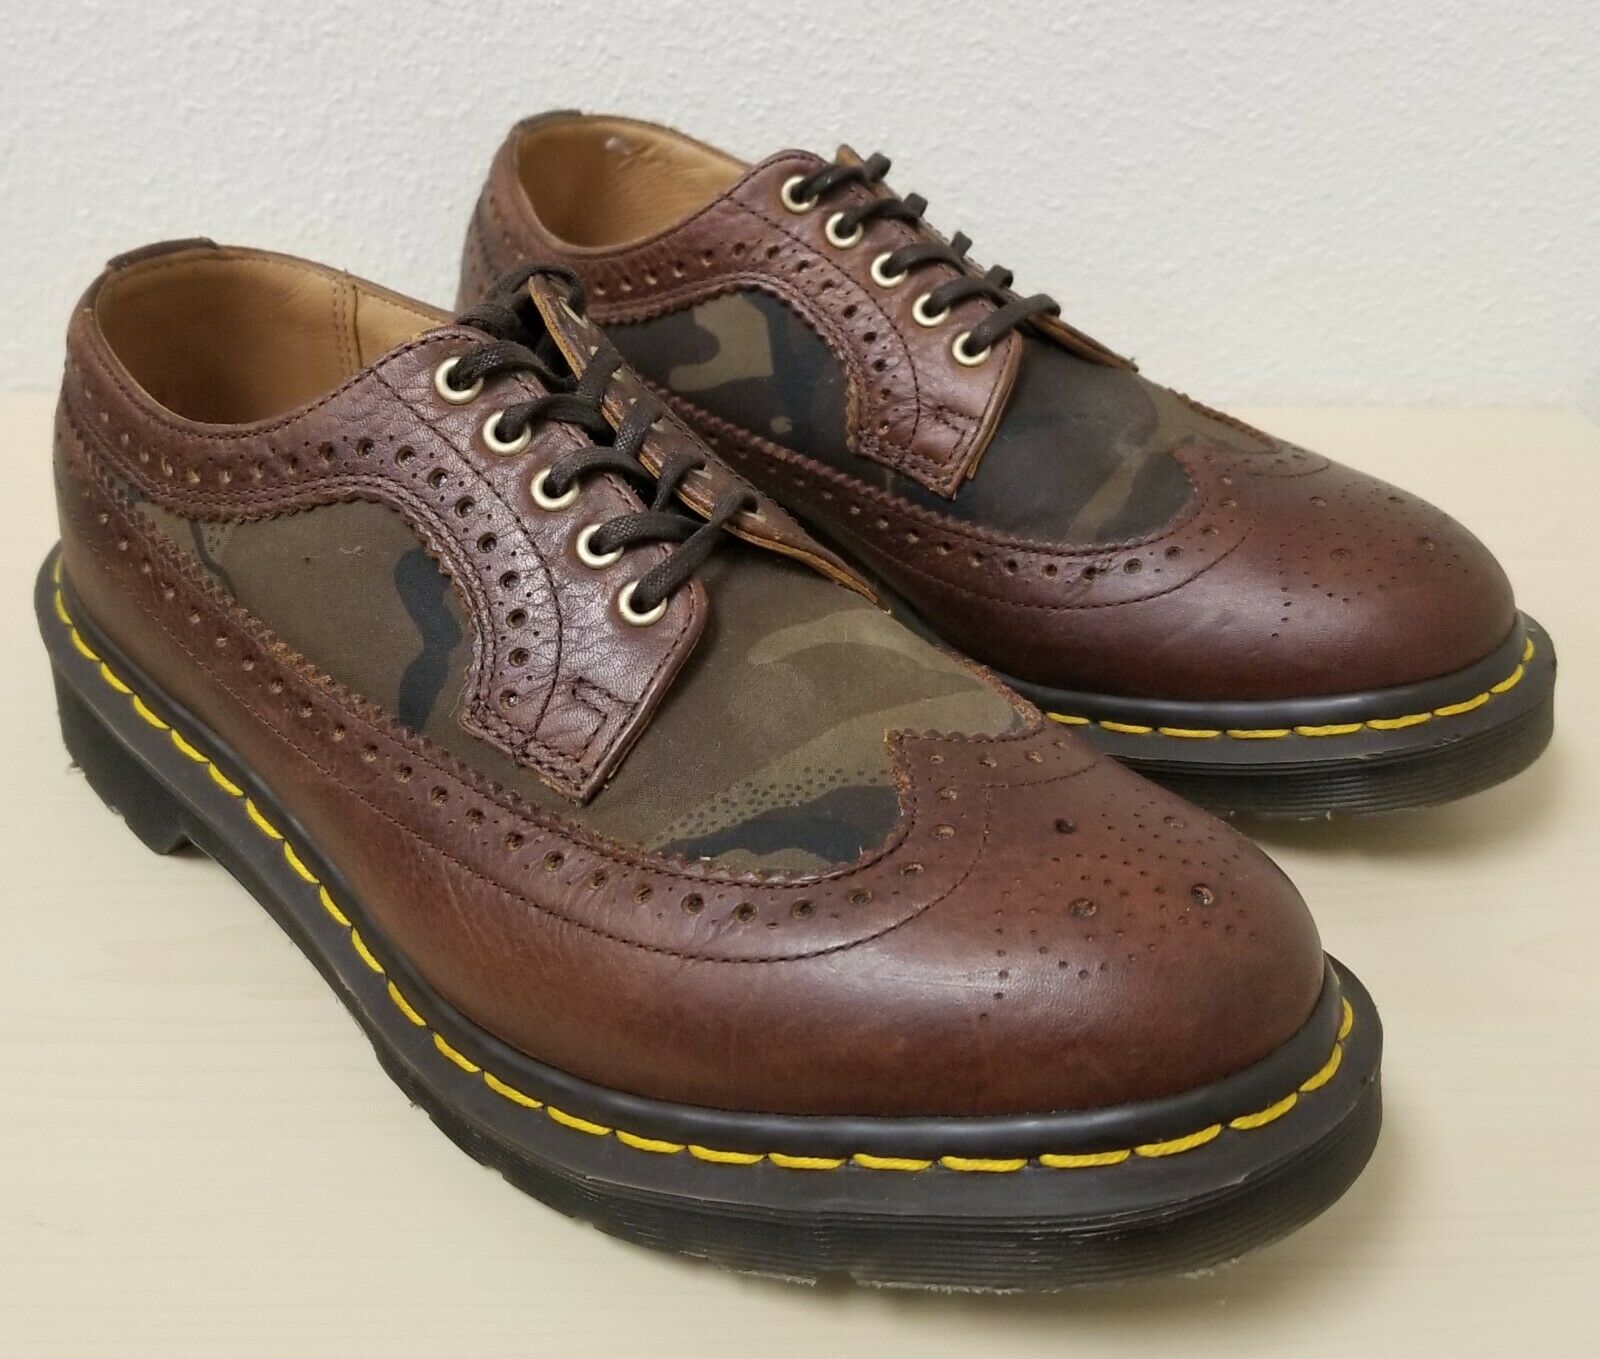 Dr Doc Martens Brown & Camouflage Camo Wingtip Oxford Mens 7 Dress Shoes